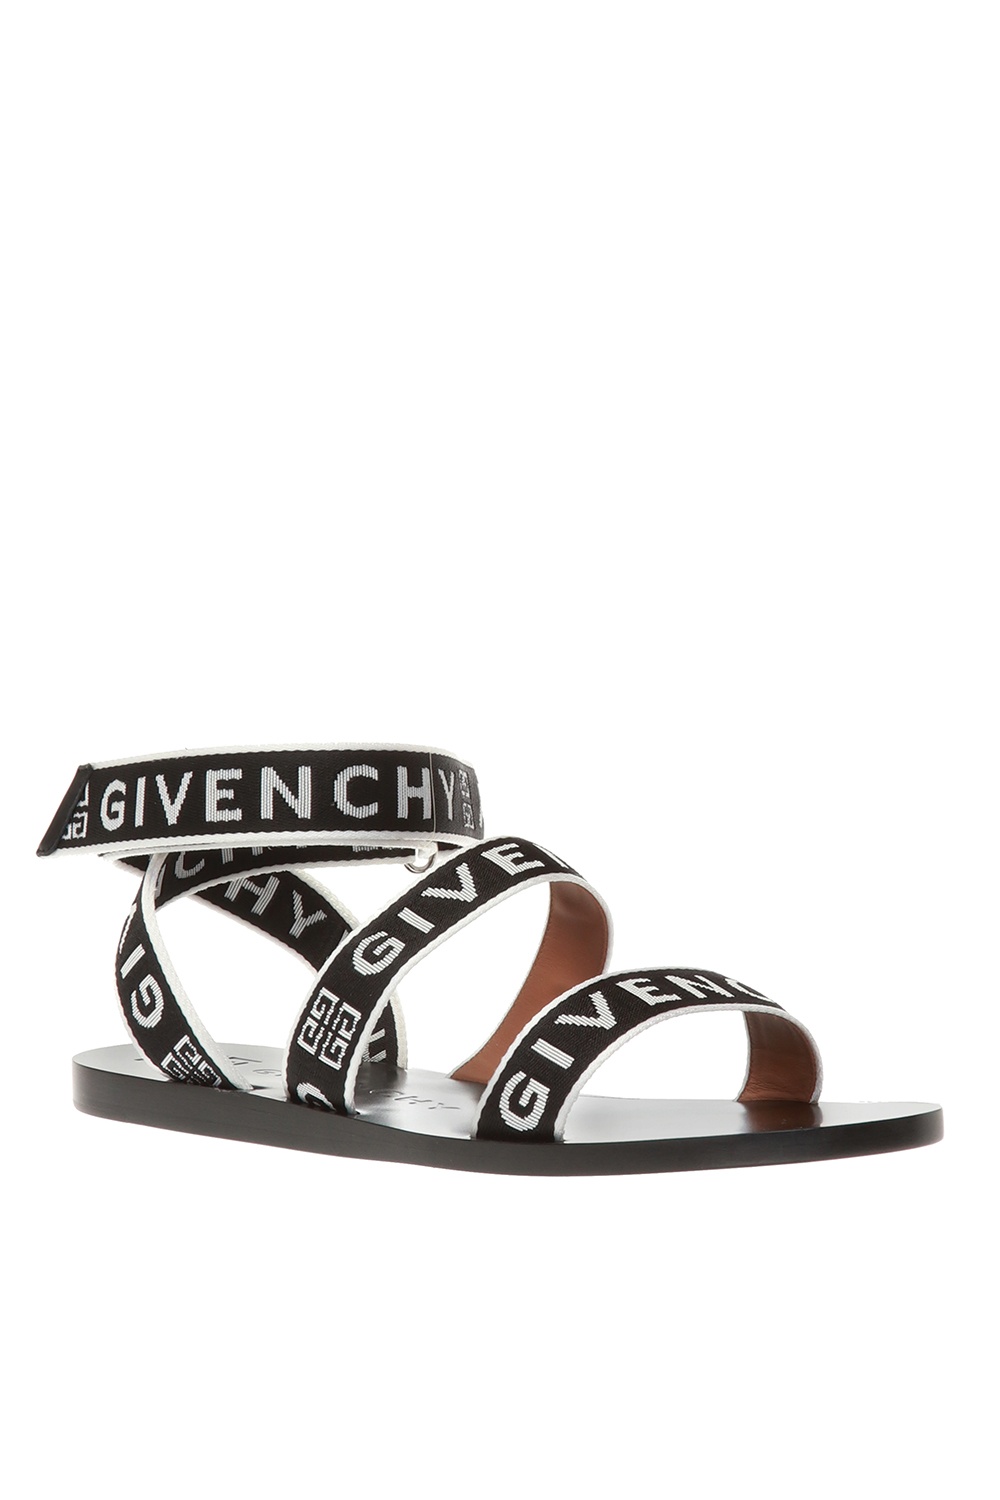 Givenchy '4G' logo sandals | Women's Shoes | Vitkac